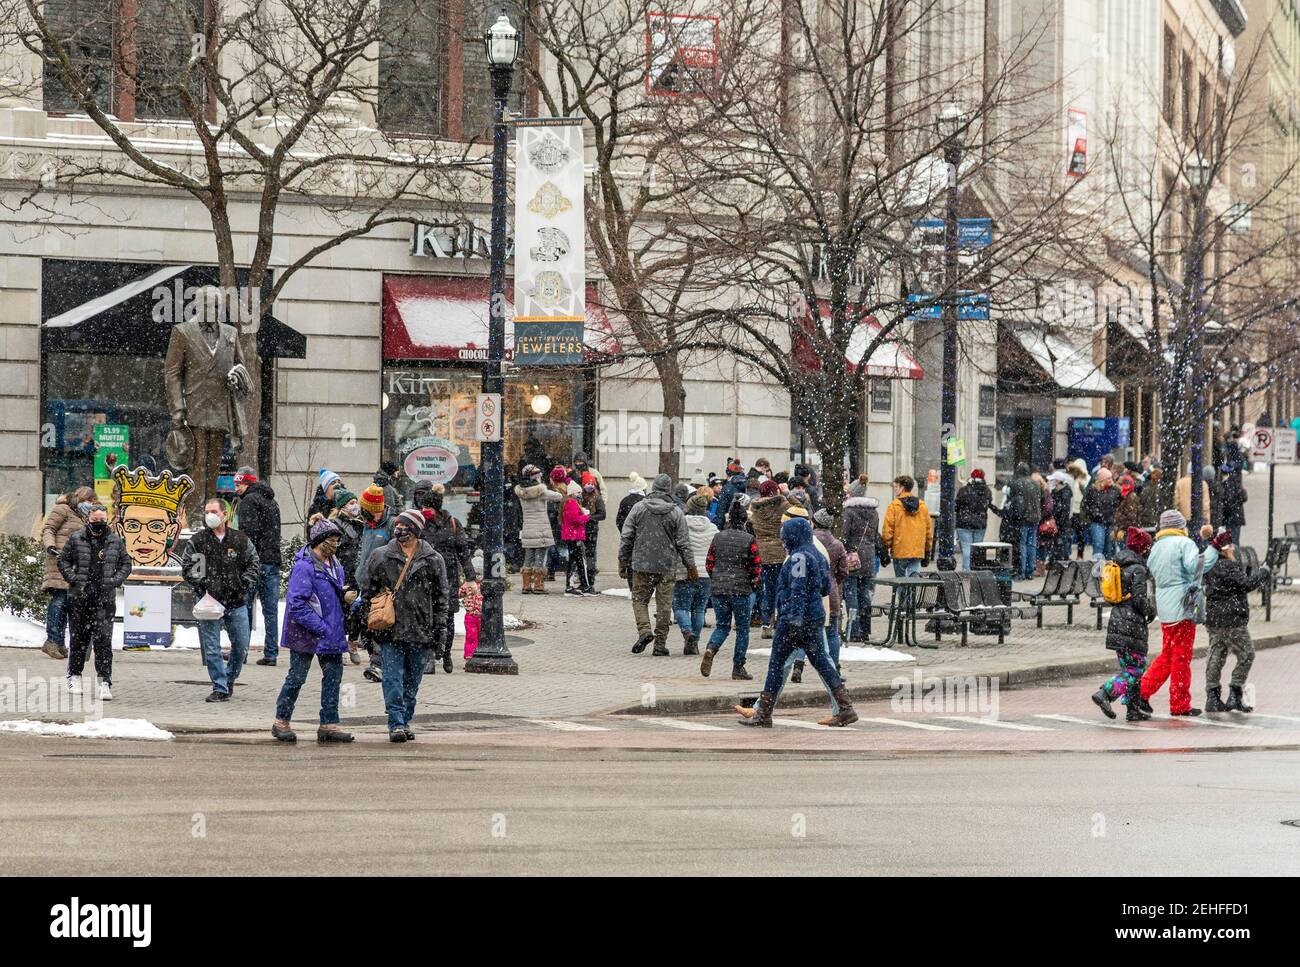 Grand Rapids, Michigan - Winter crowds on downtown streets during the coronavirus pandemic. Stock Photo